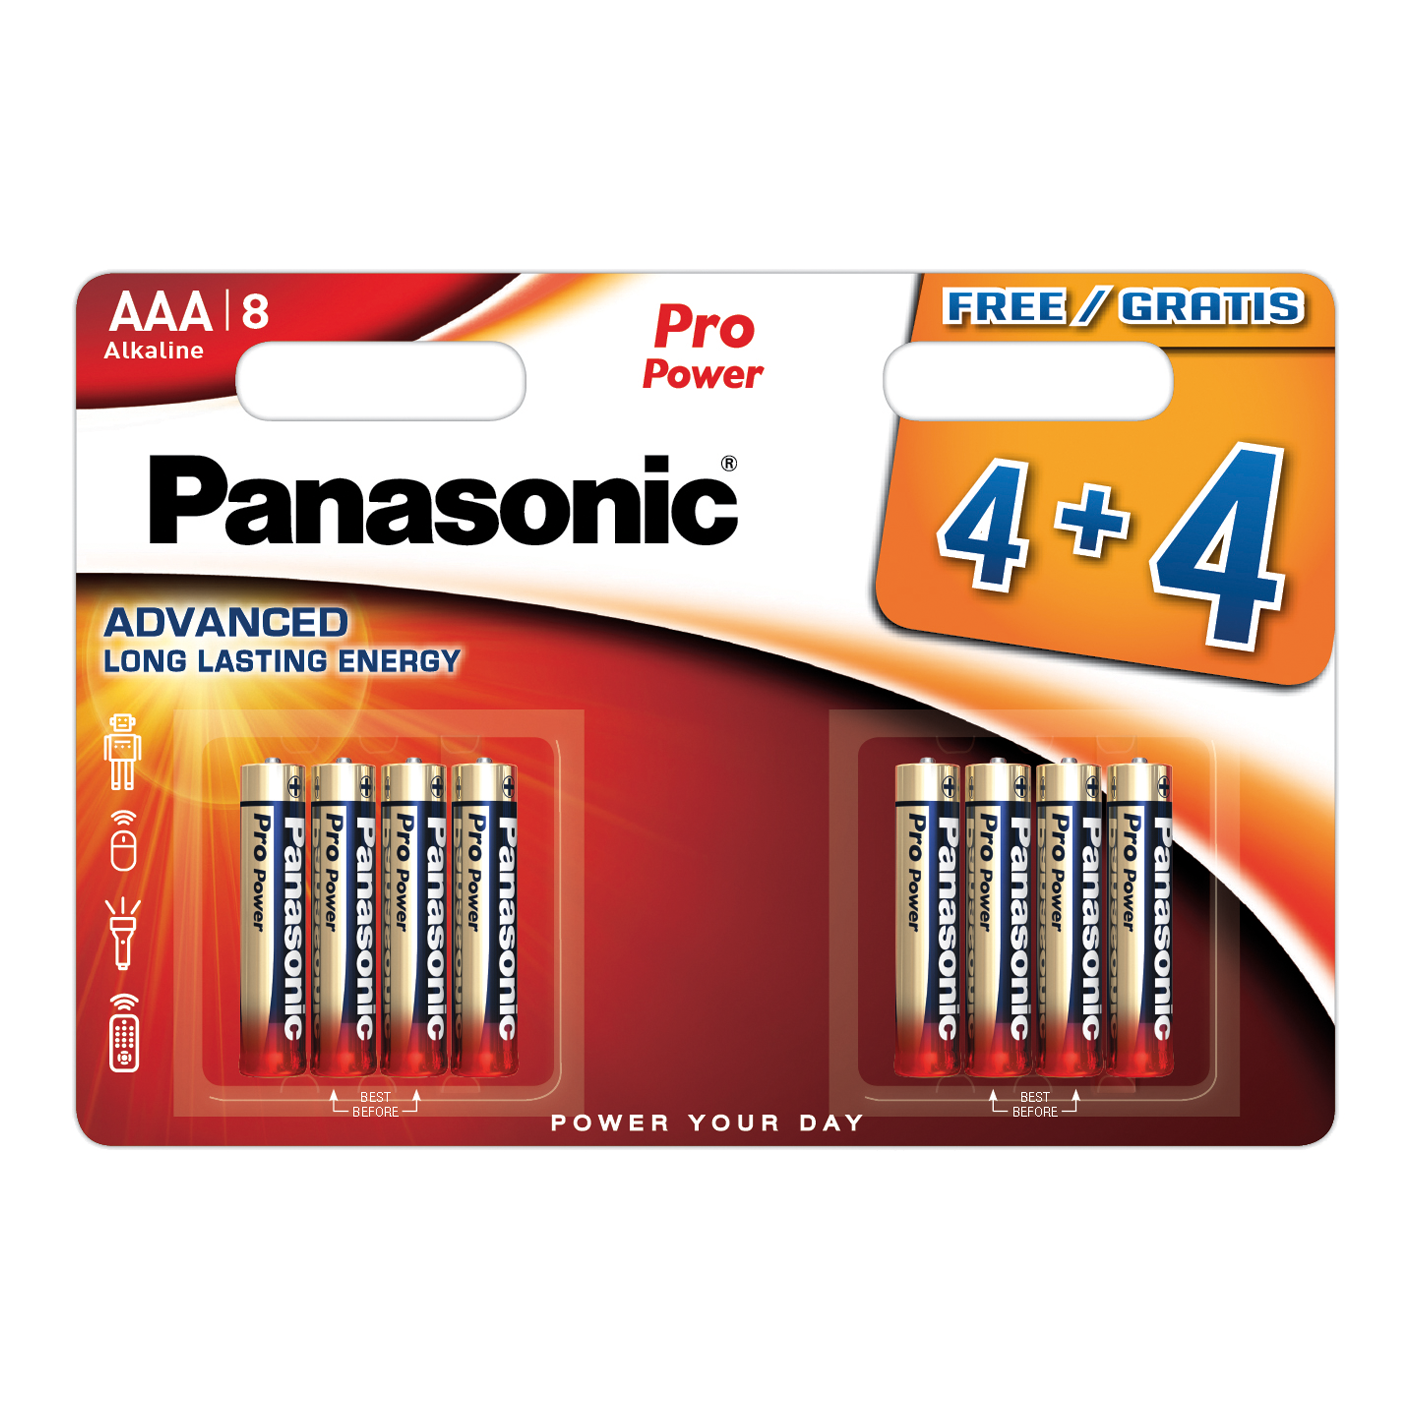 Panasonic AAA Pro Power, Pack of 4+4